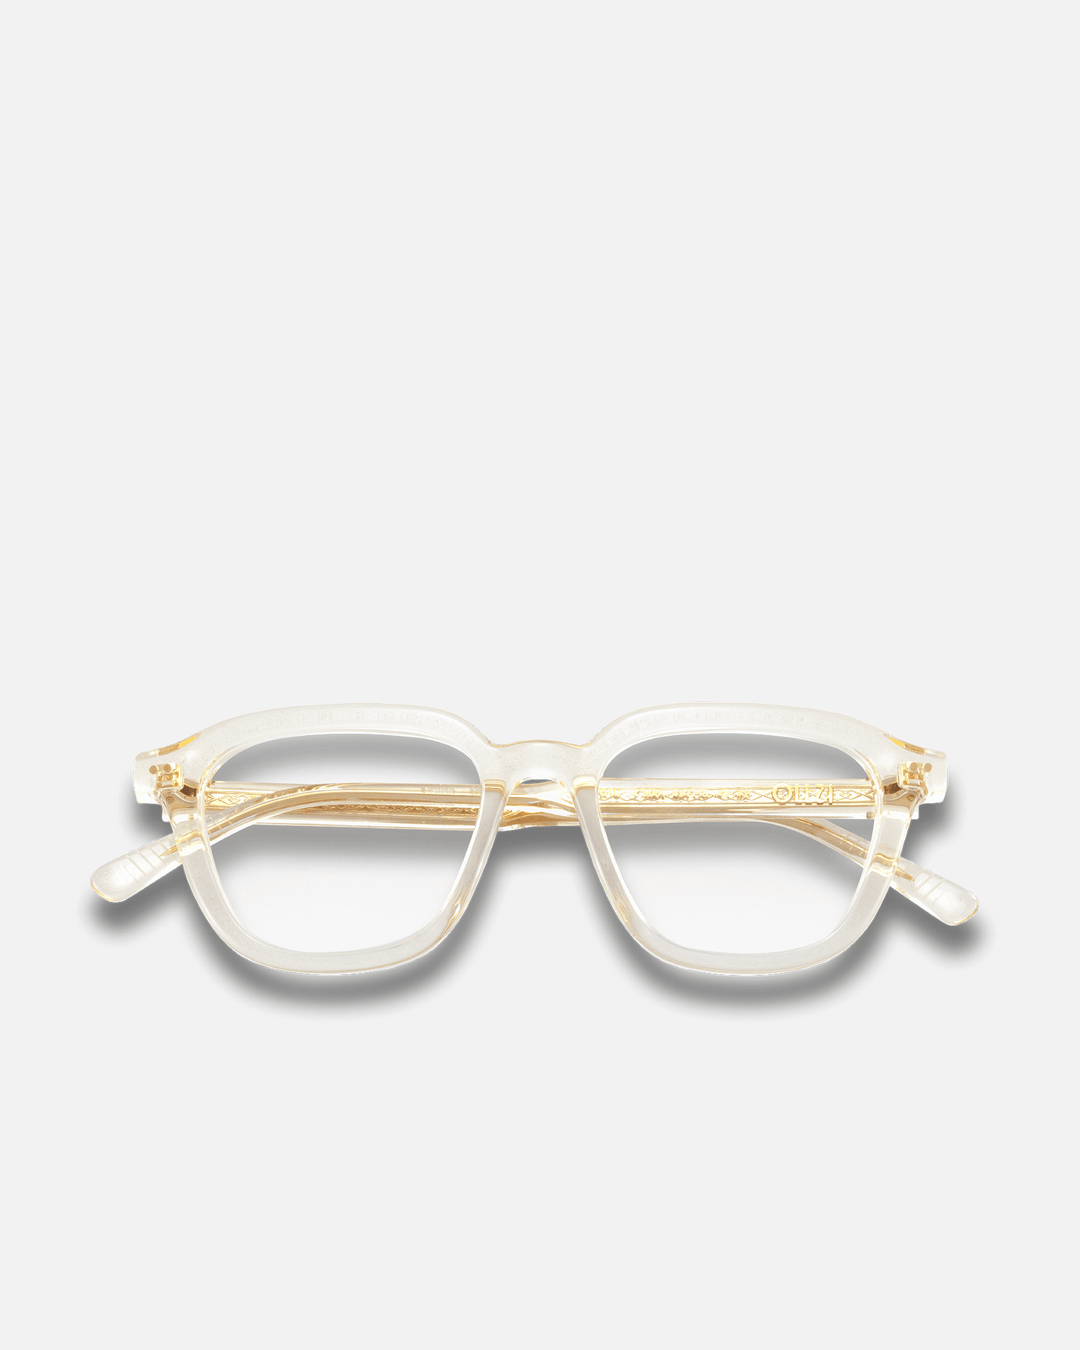 YUZU Bio-Acetate Wayfarer Frame Sunglasses for Men & Women | Champagne | Sunnies Collection | OLLU